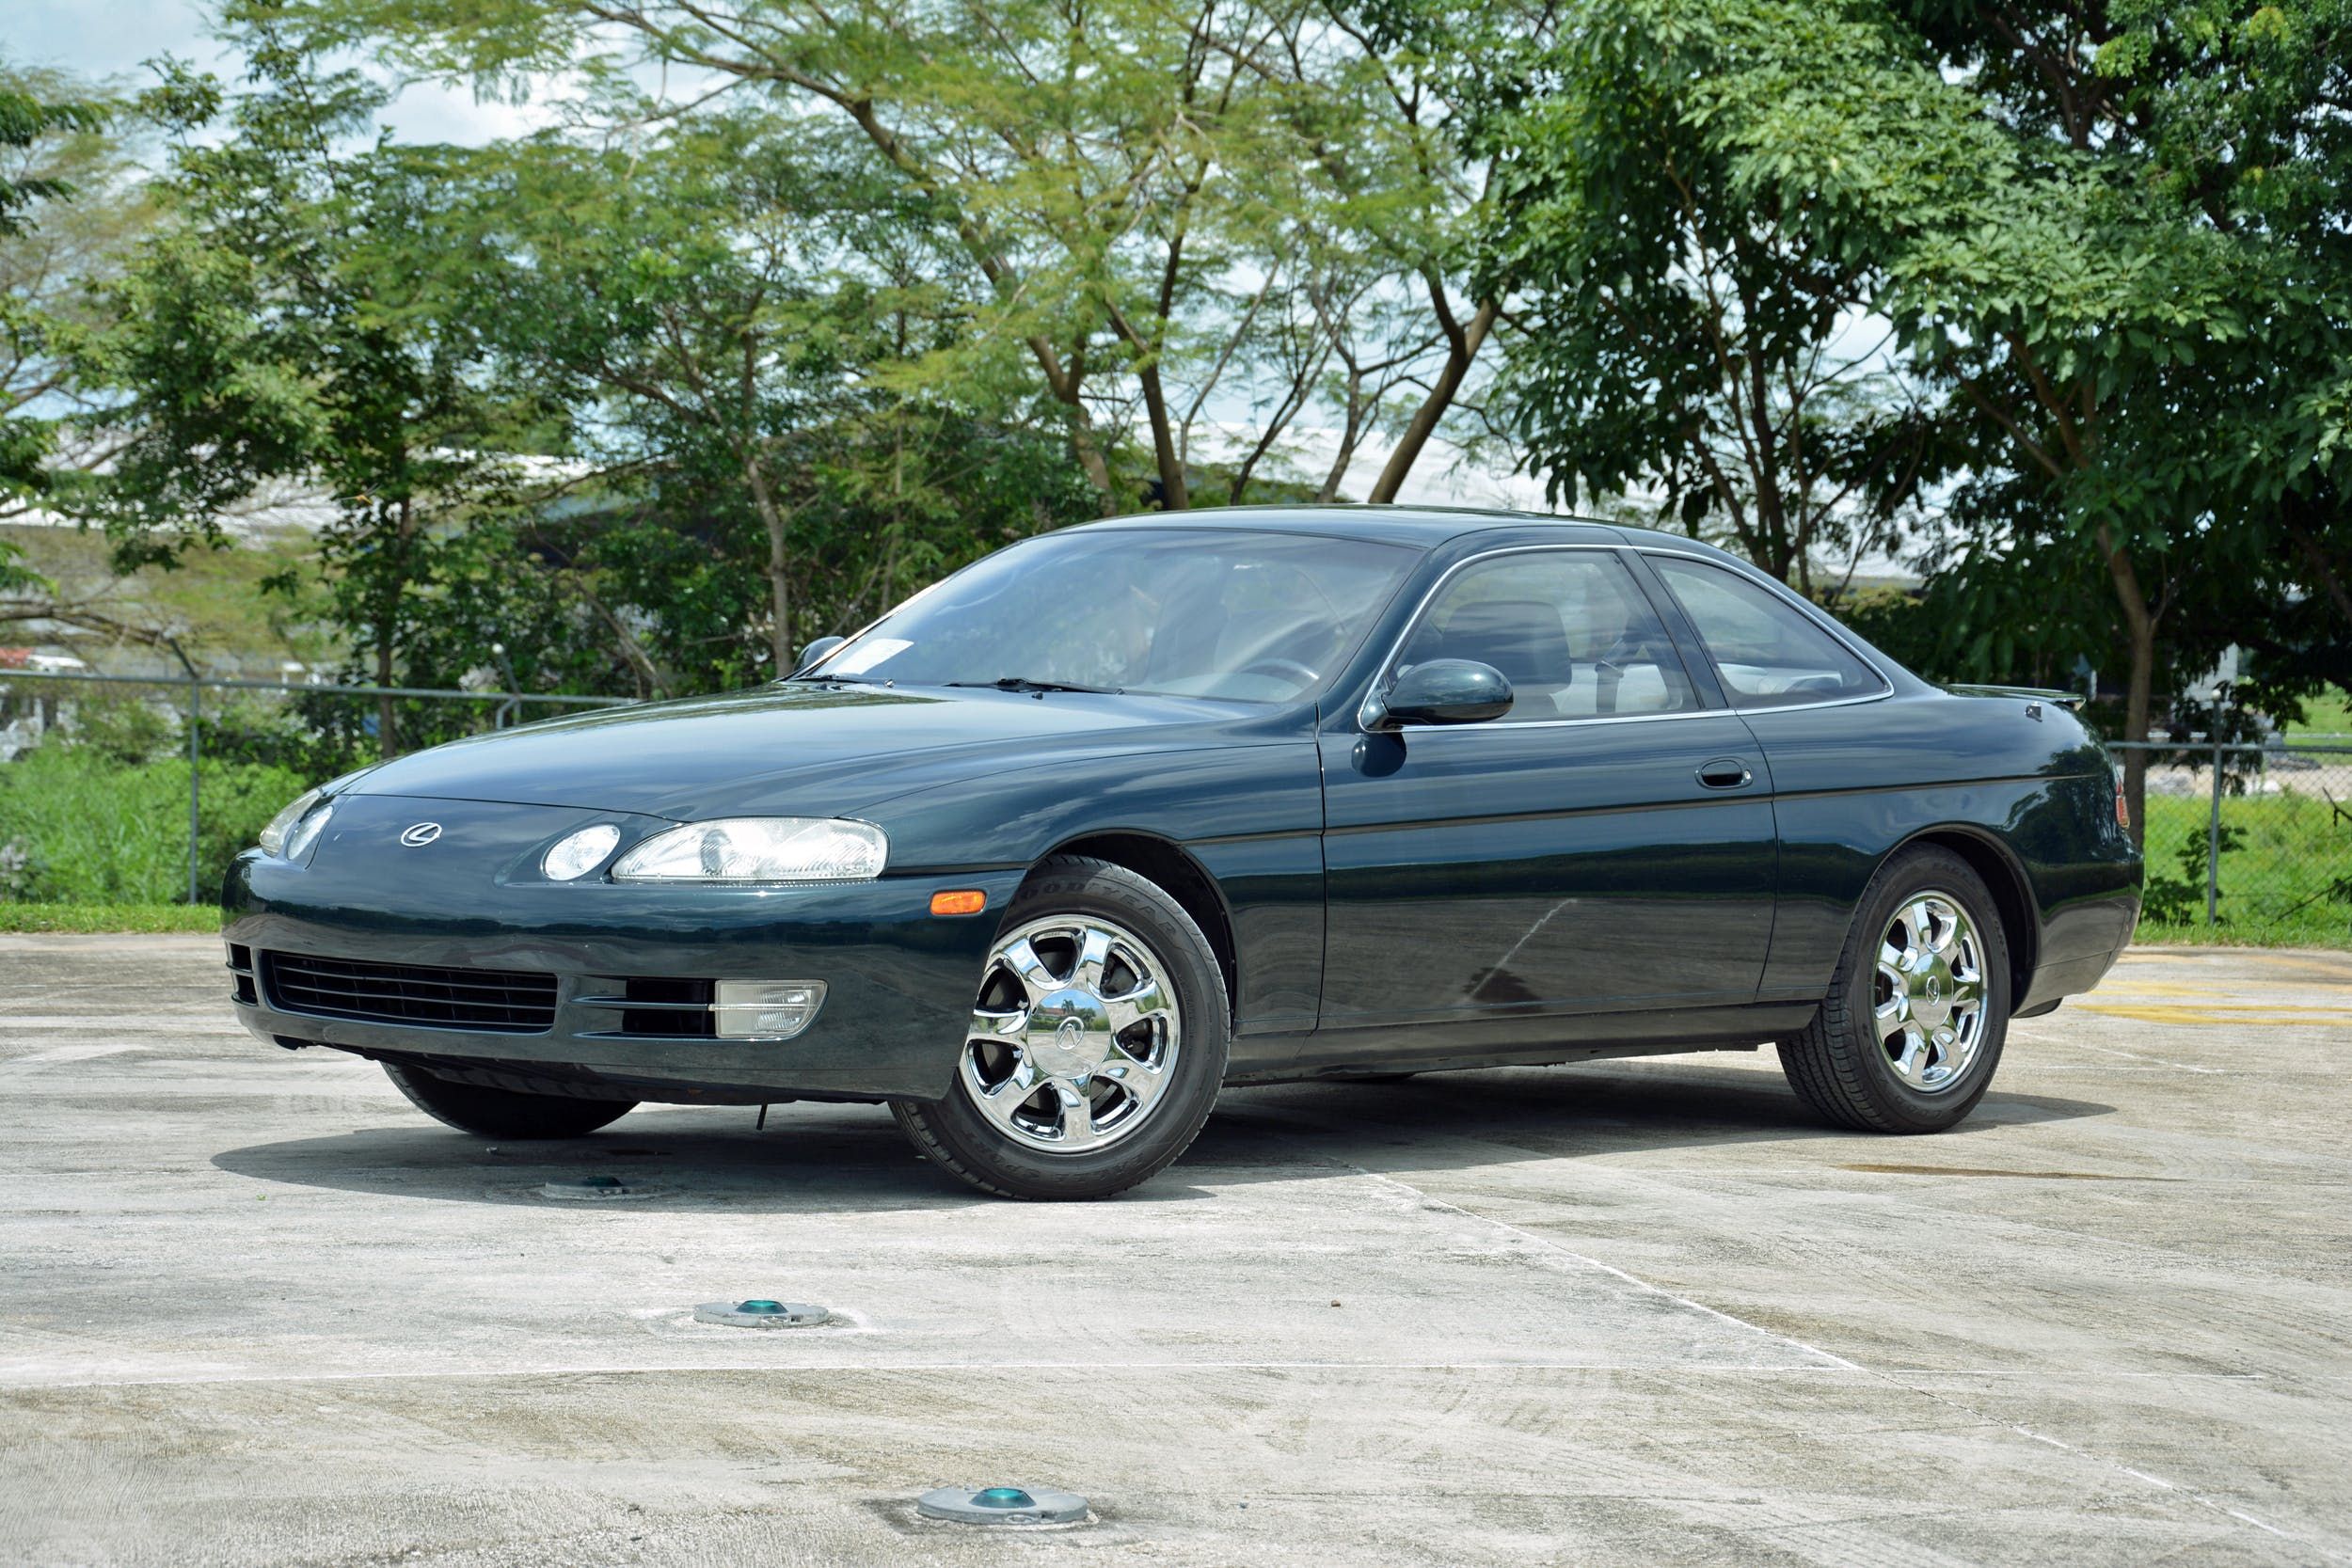 1996 Lexus SC400: The luxury sports sedan that makes a great project car.